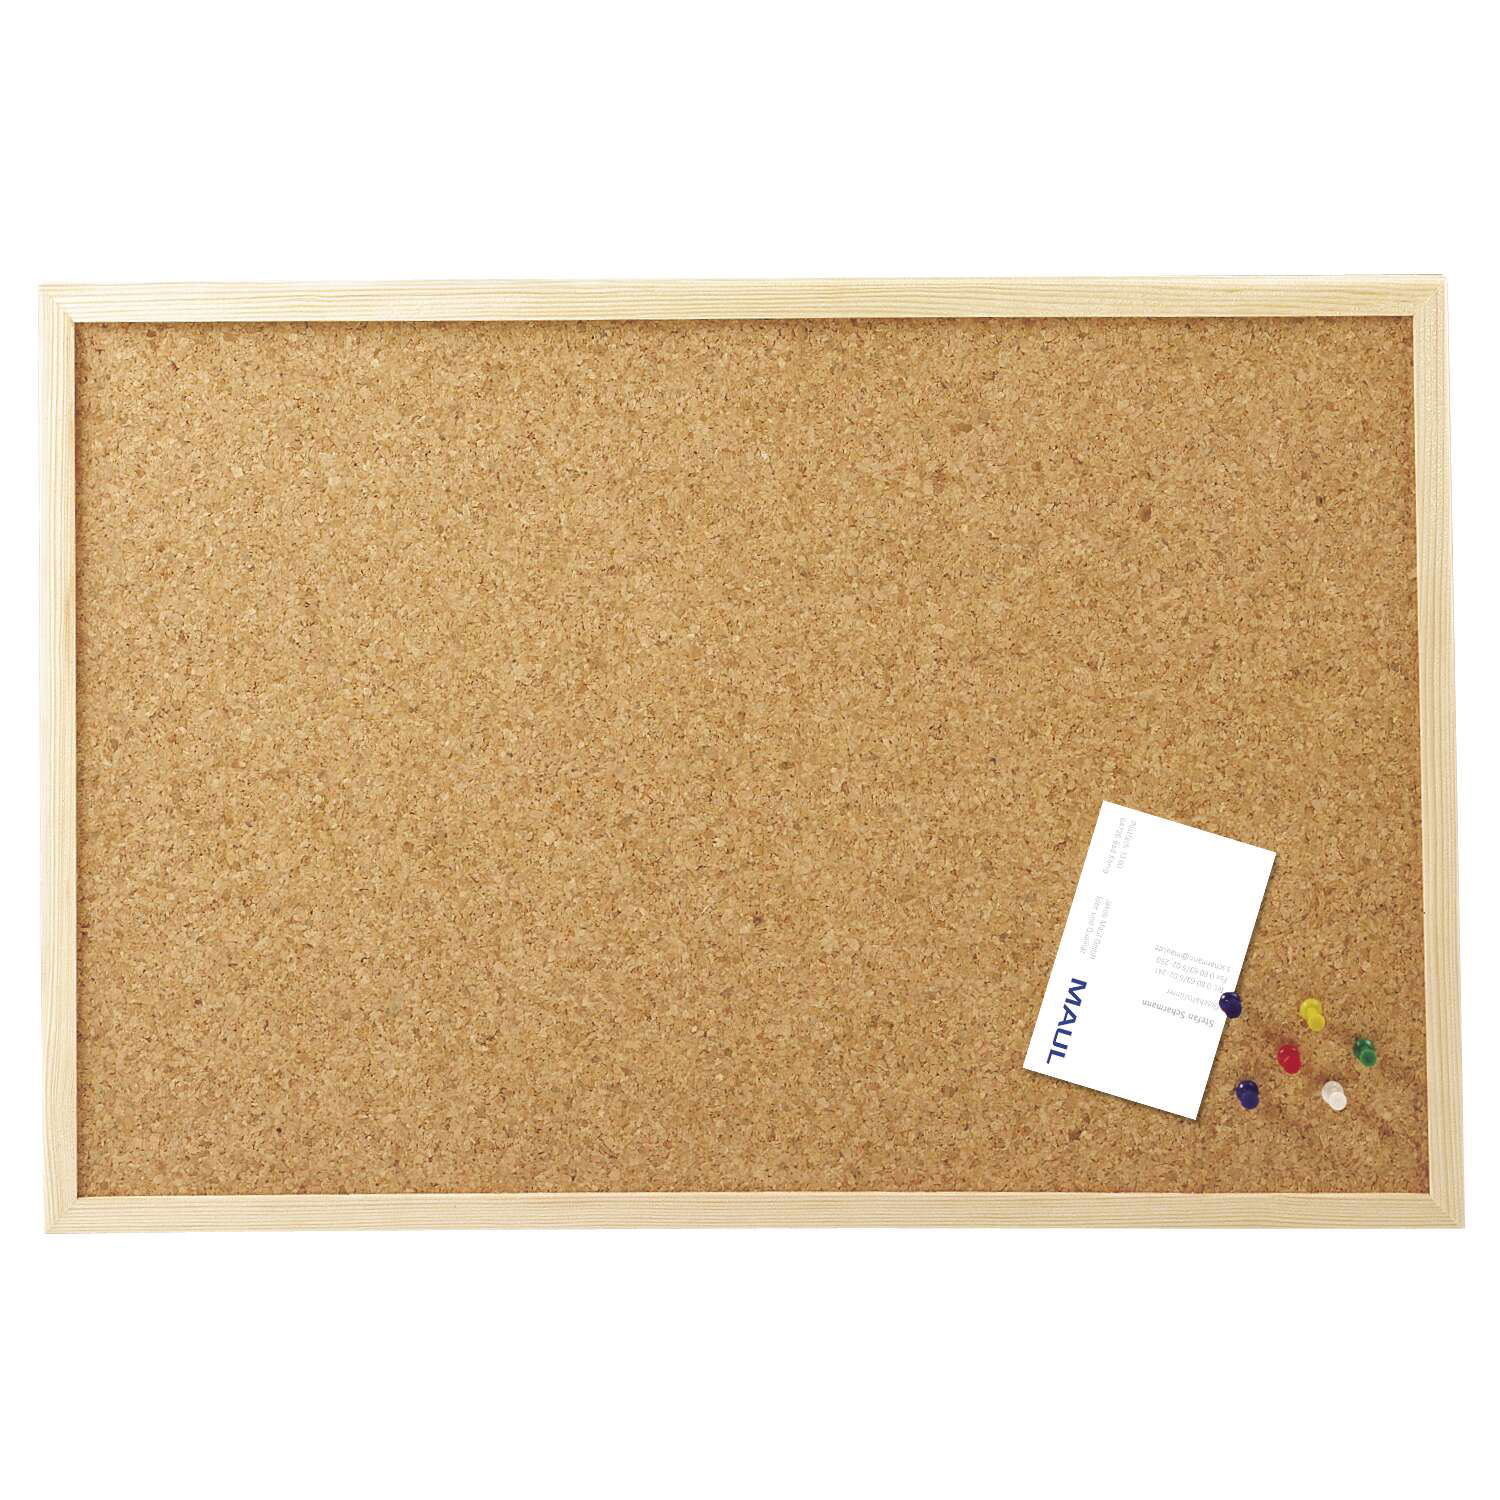 Prikbord, 40 x 60 cm, kurk, houten frame